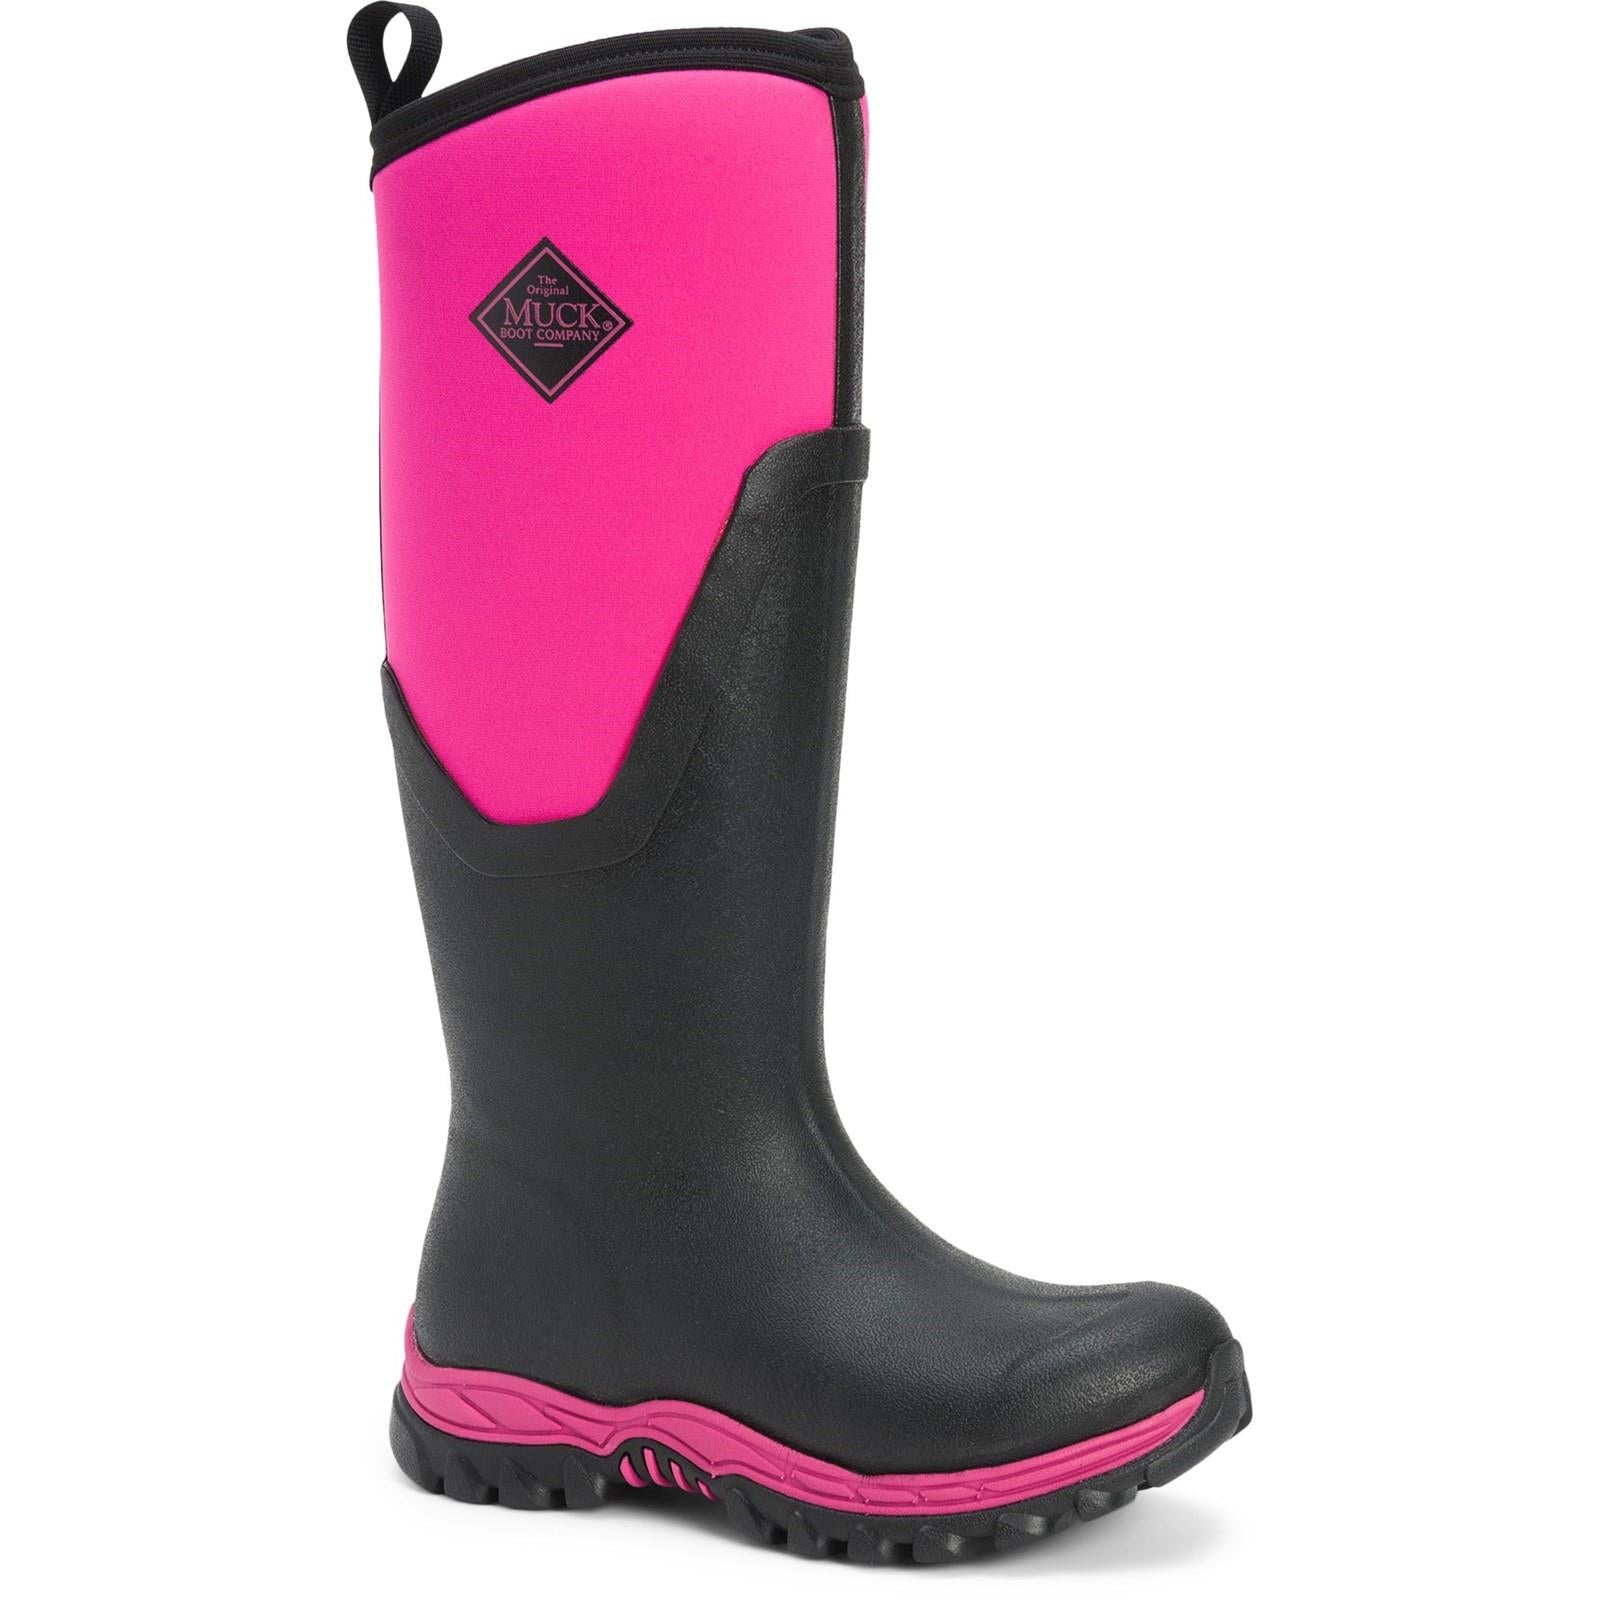 Muck Boots Arctic Sport II Tall black/pink warm fleece lined wellington boots